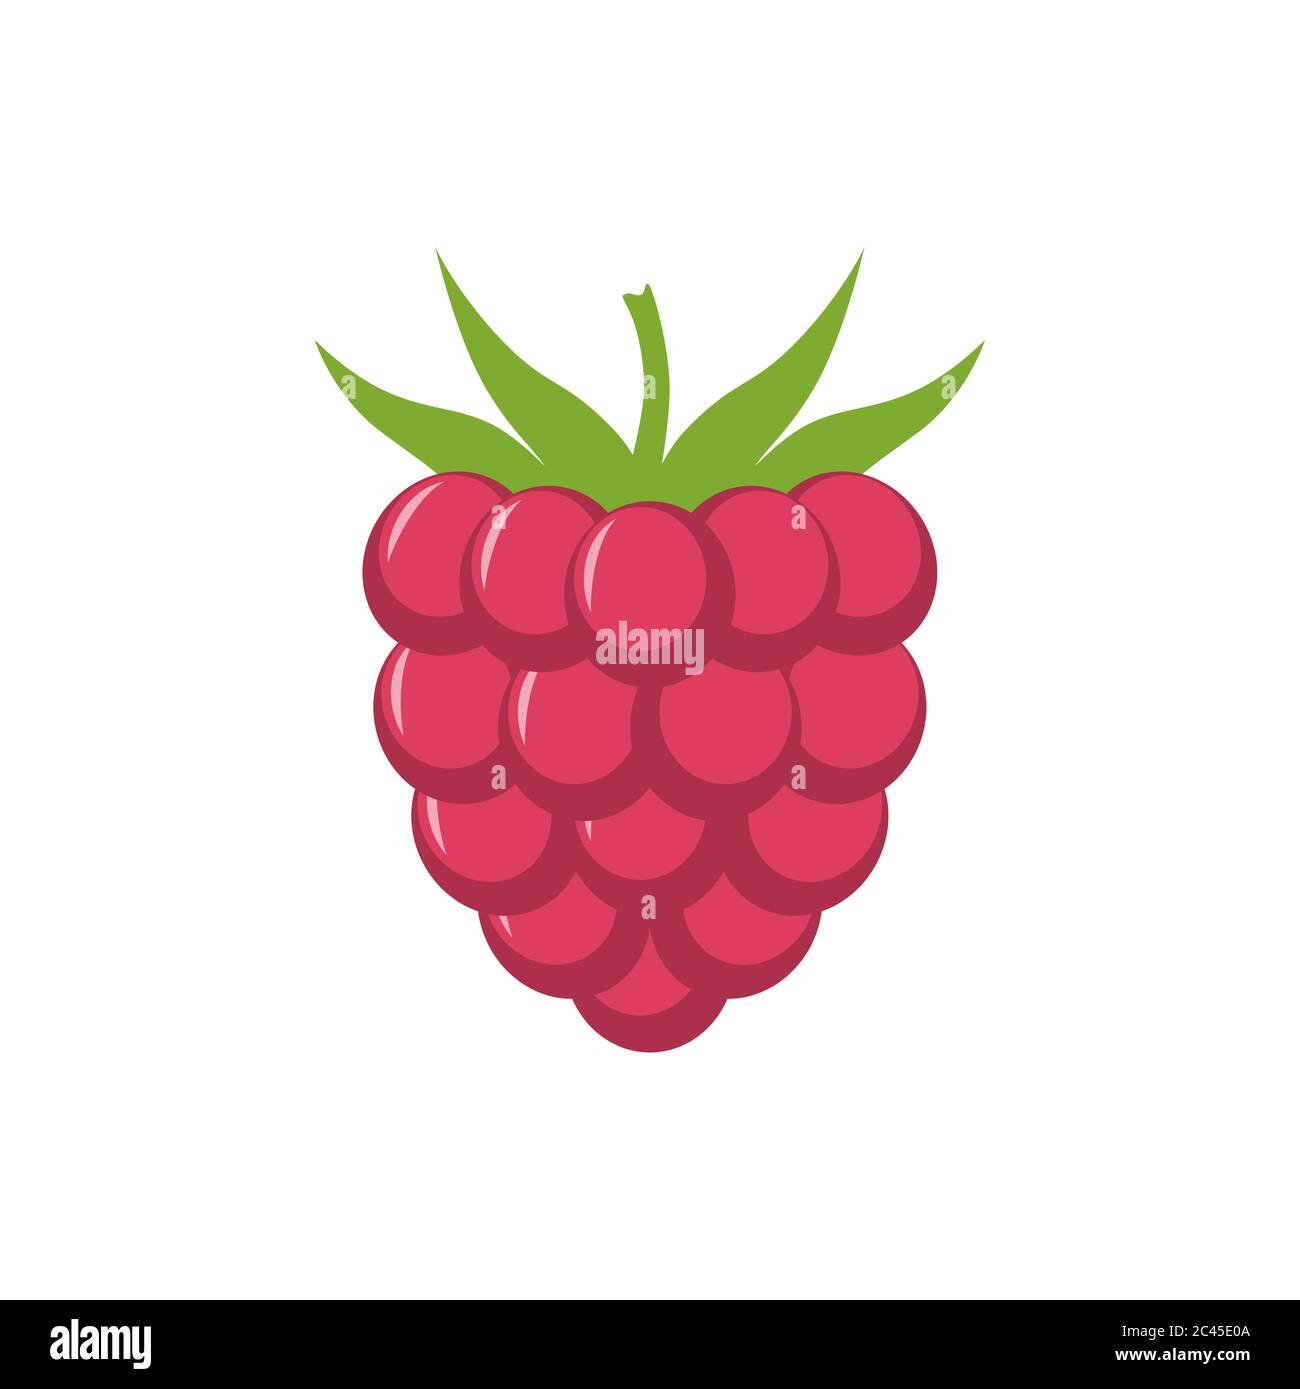 Cartoon Raspberry